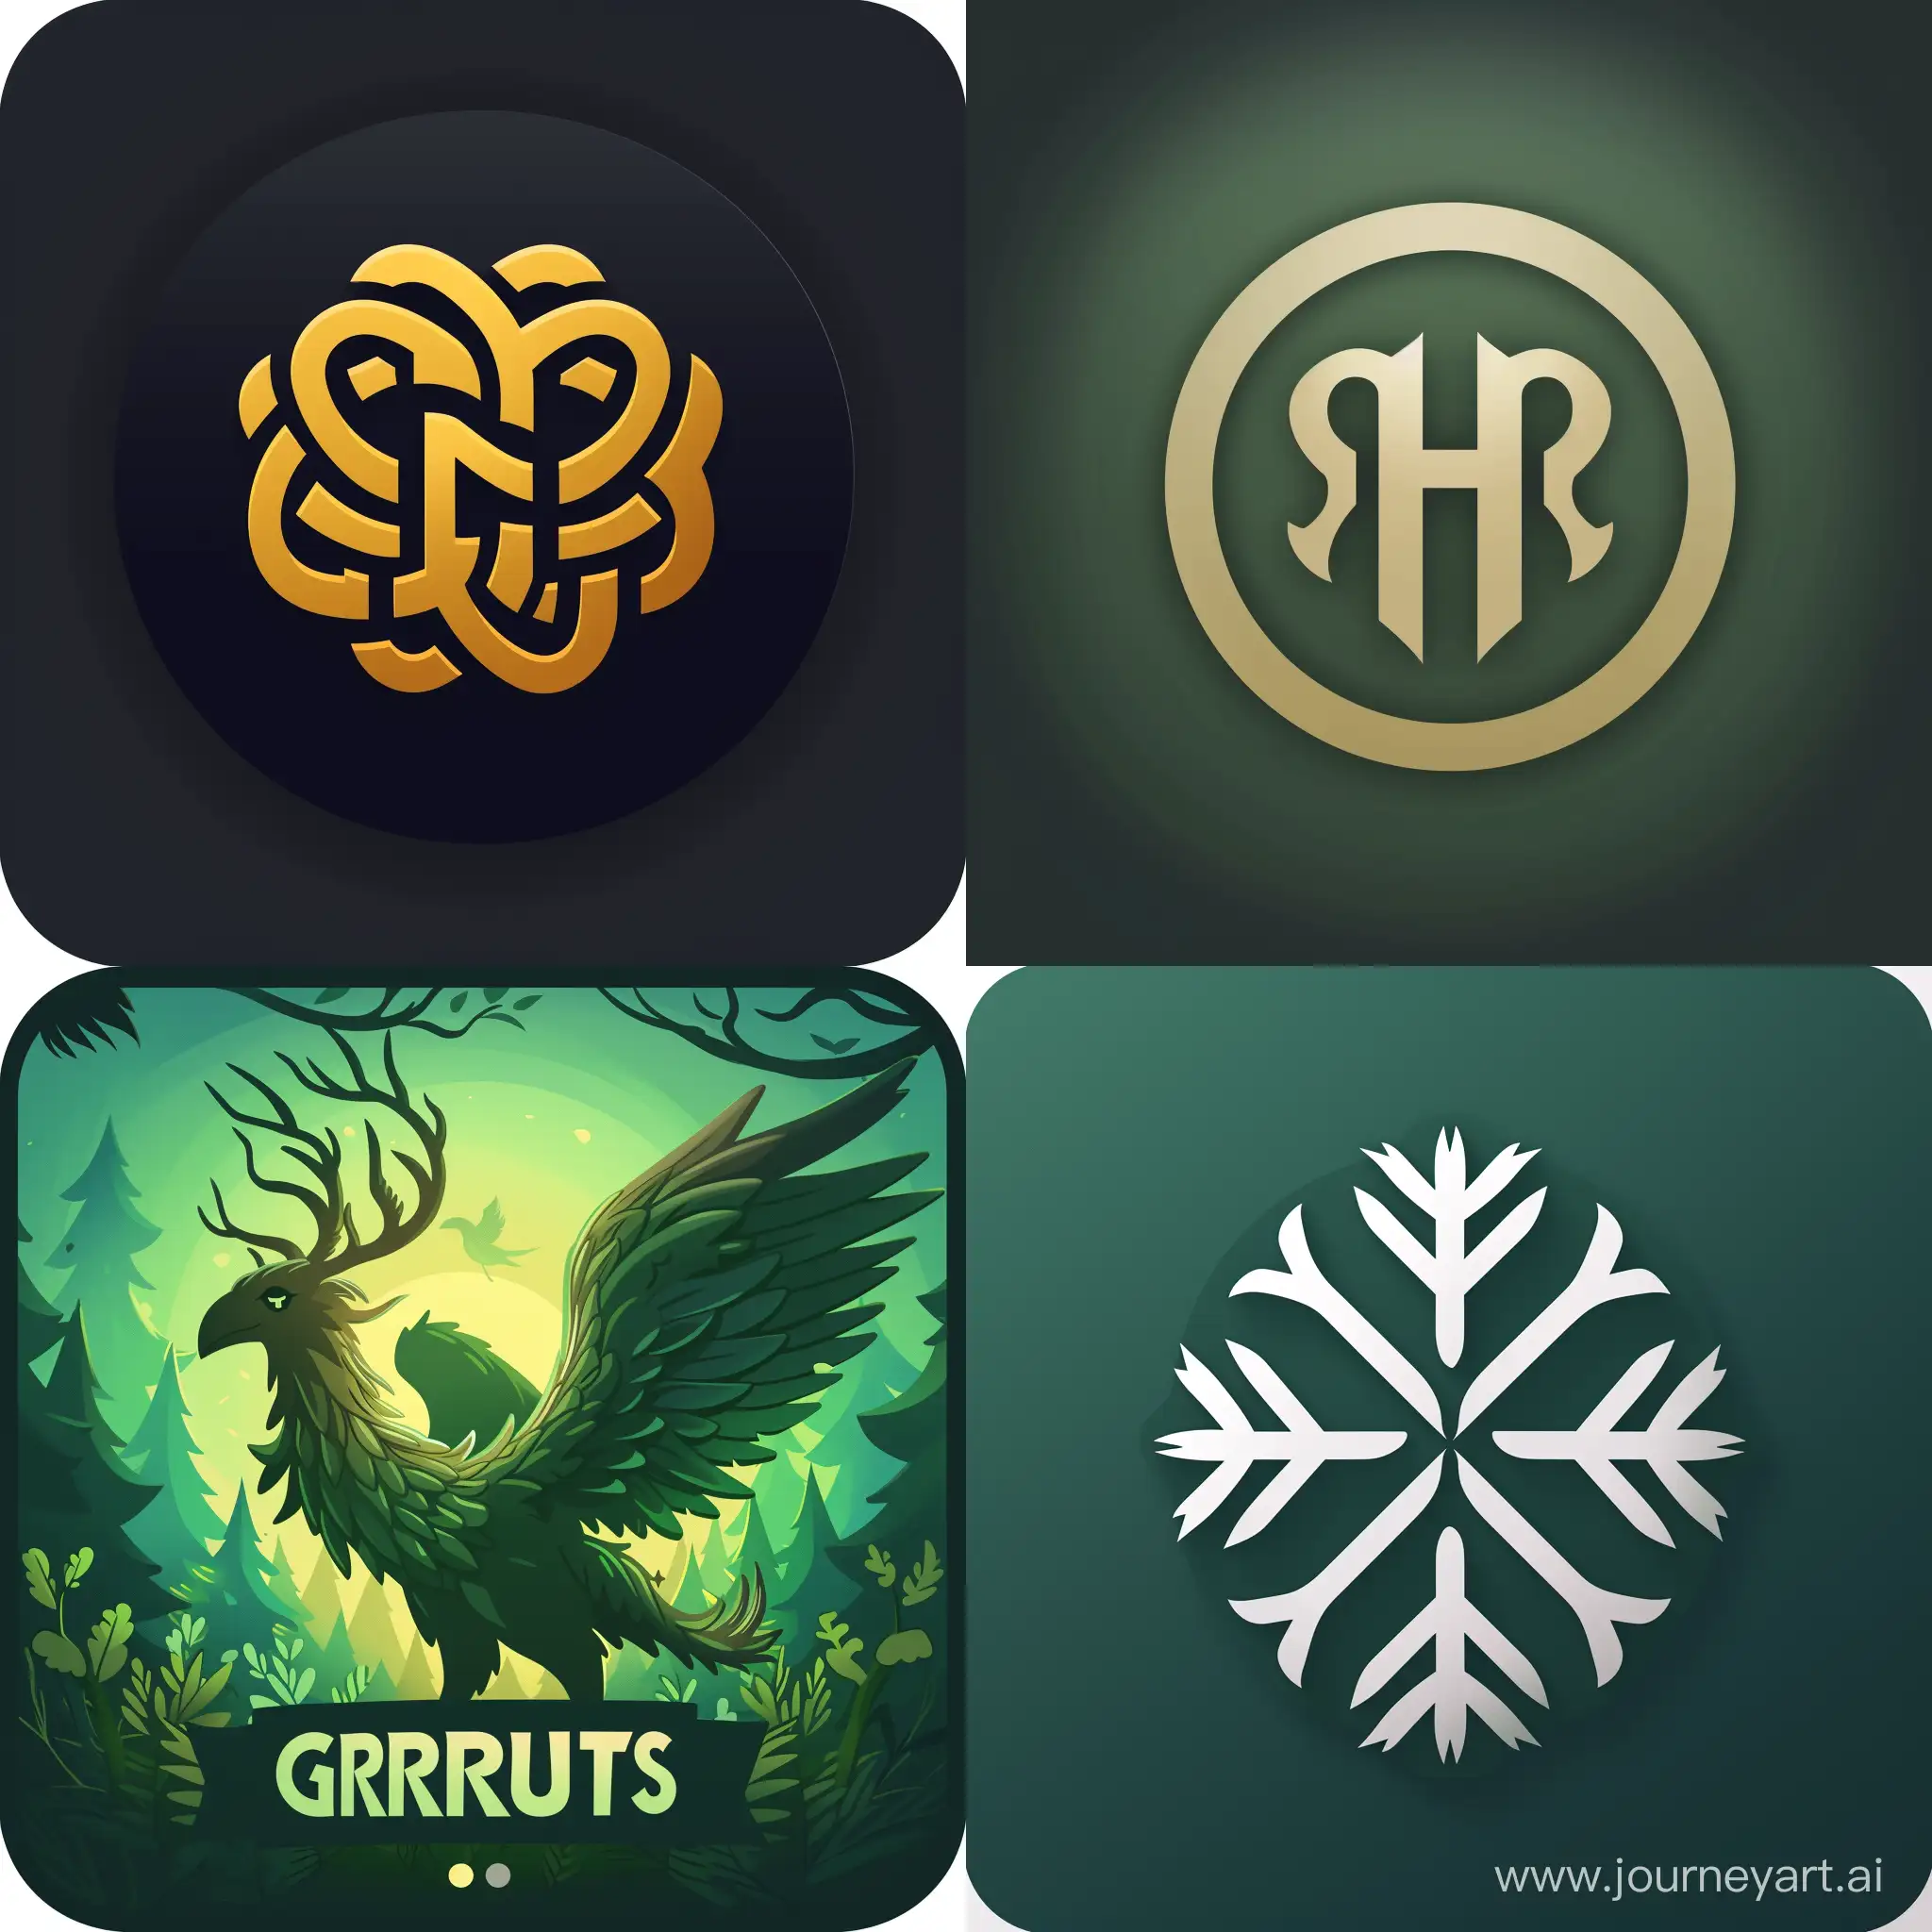 Can you make a logo for an app called GrønnRute